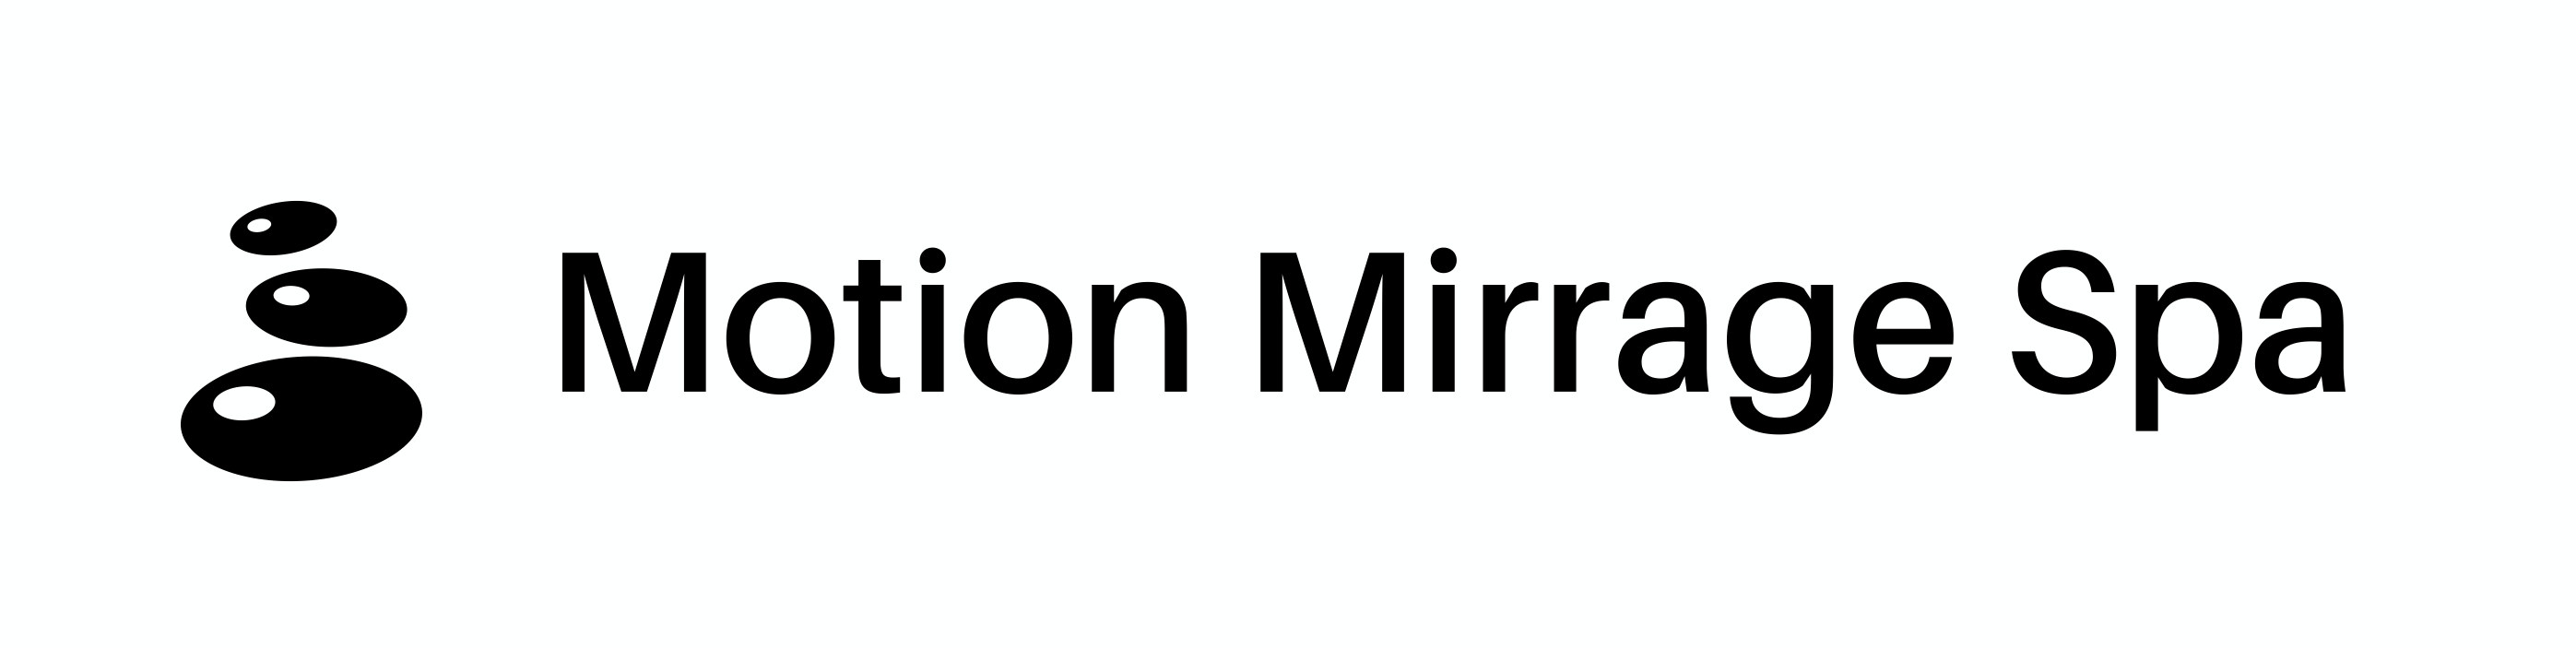 Motion Mirrage Spa Logo